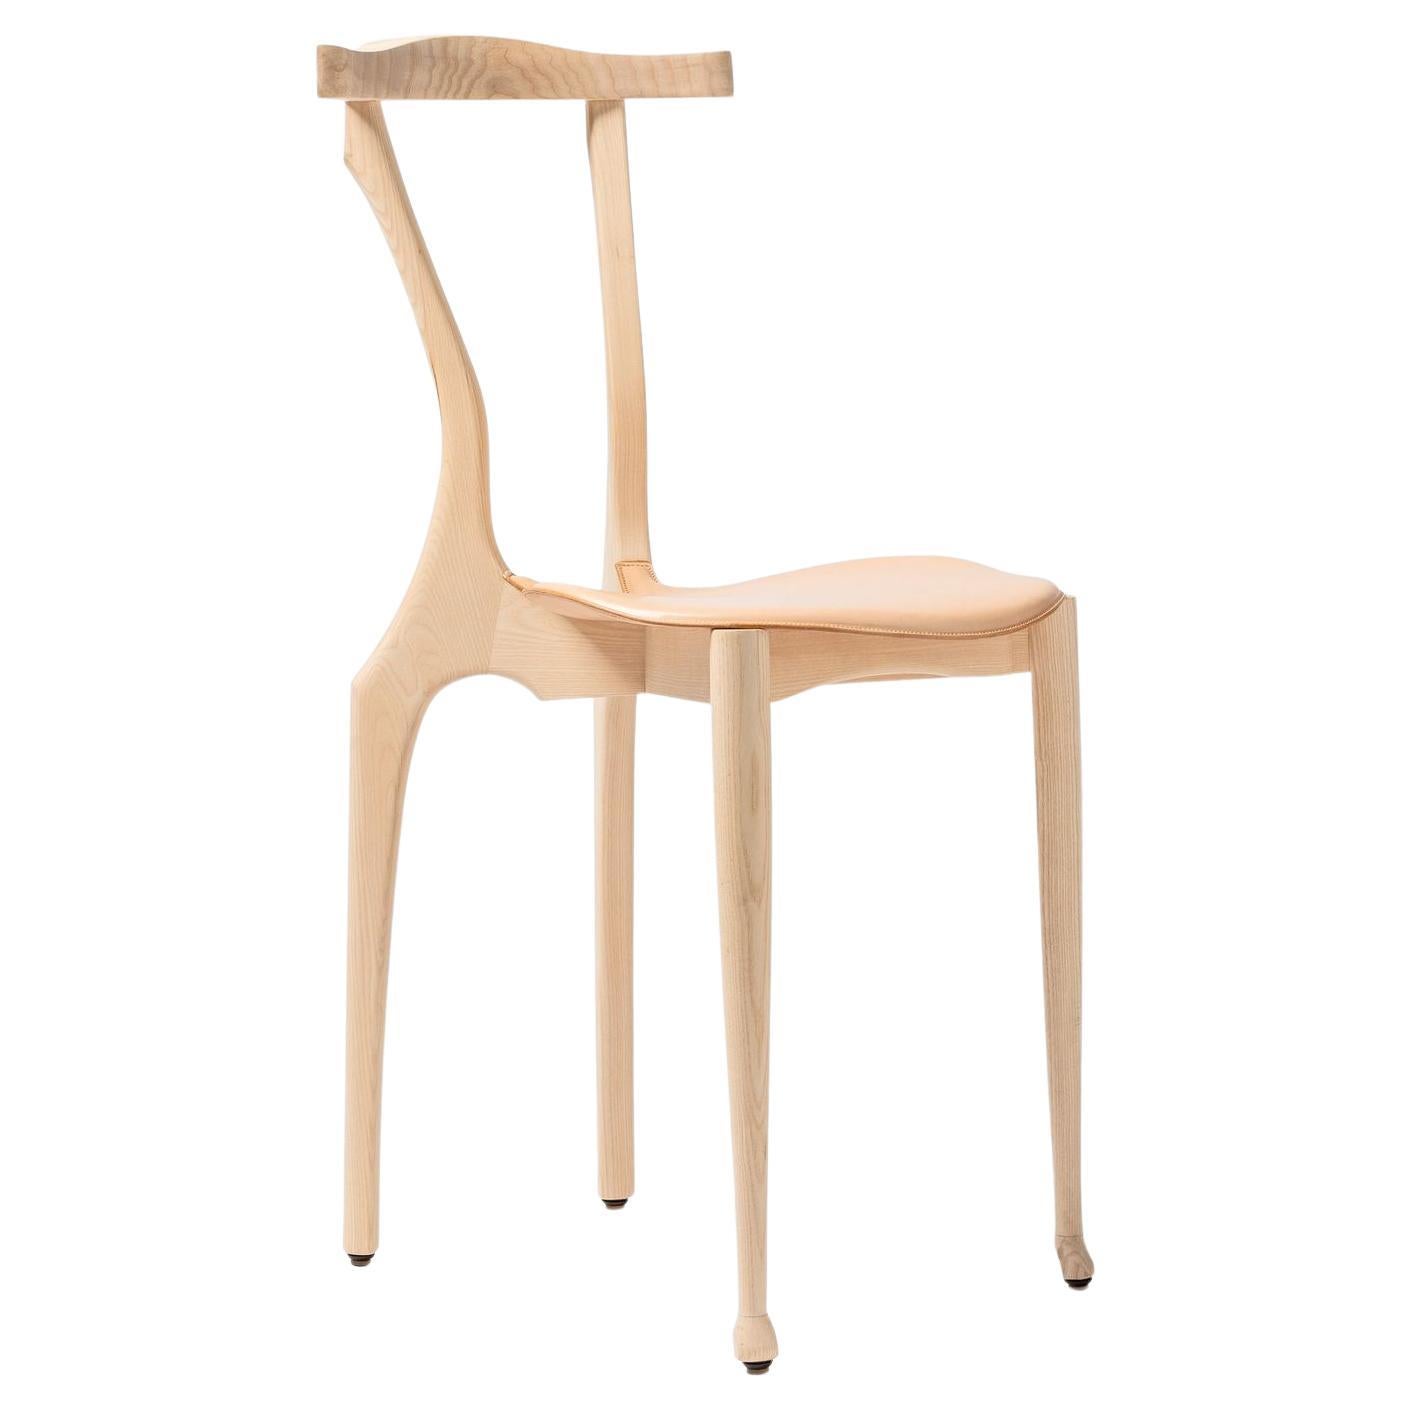 Gaulinetta Natural Chair by Oscar Tusquets